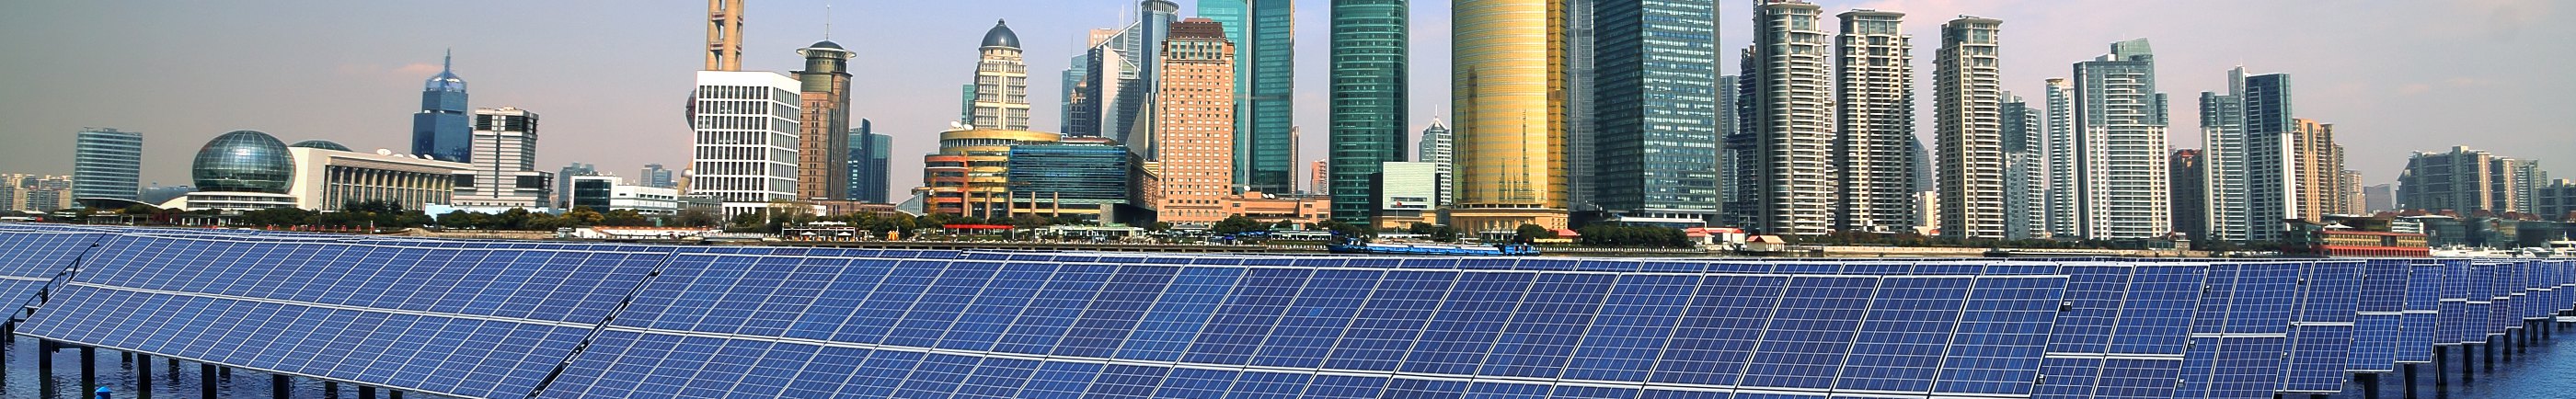 Shanghai Bund skyline landmark Ecological energy renewable solar panel plant